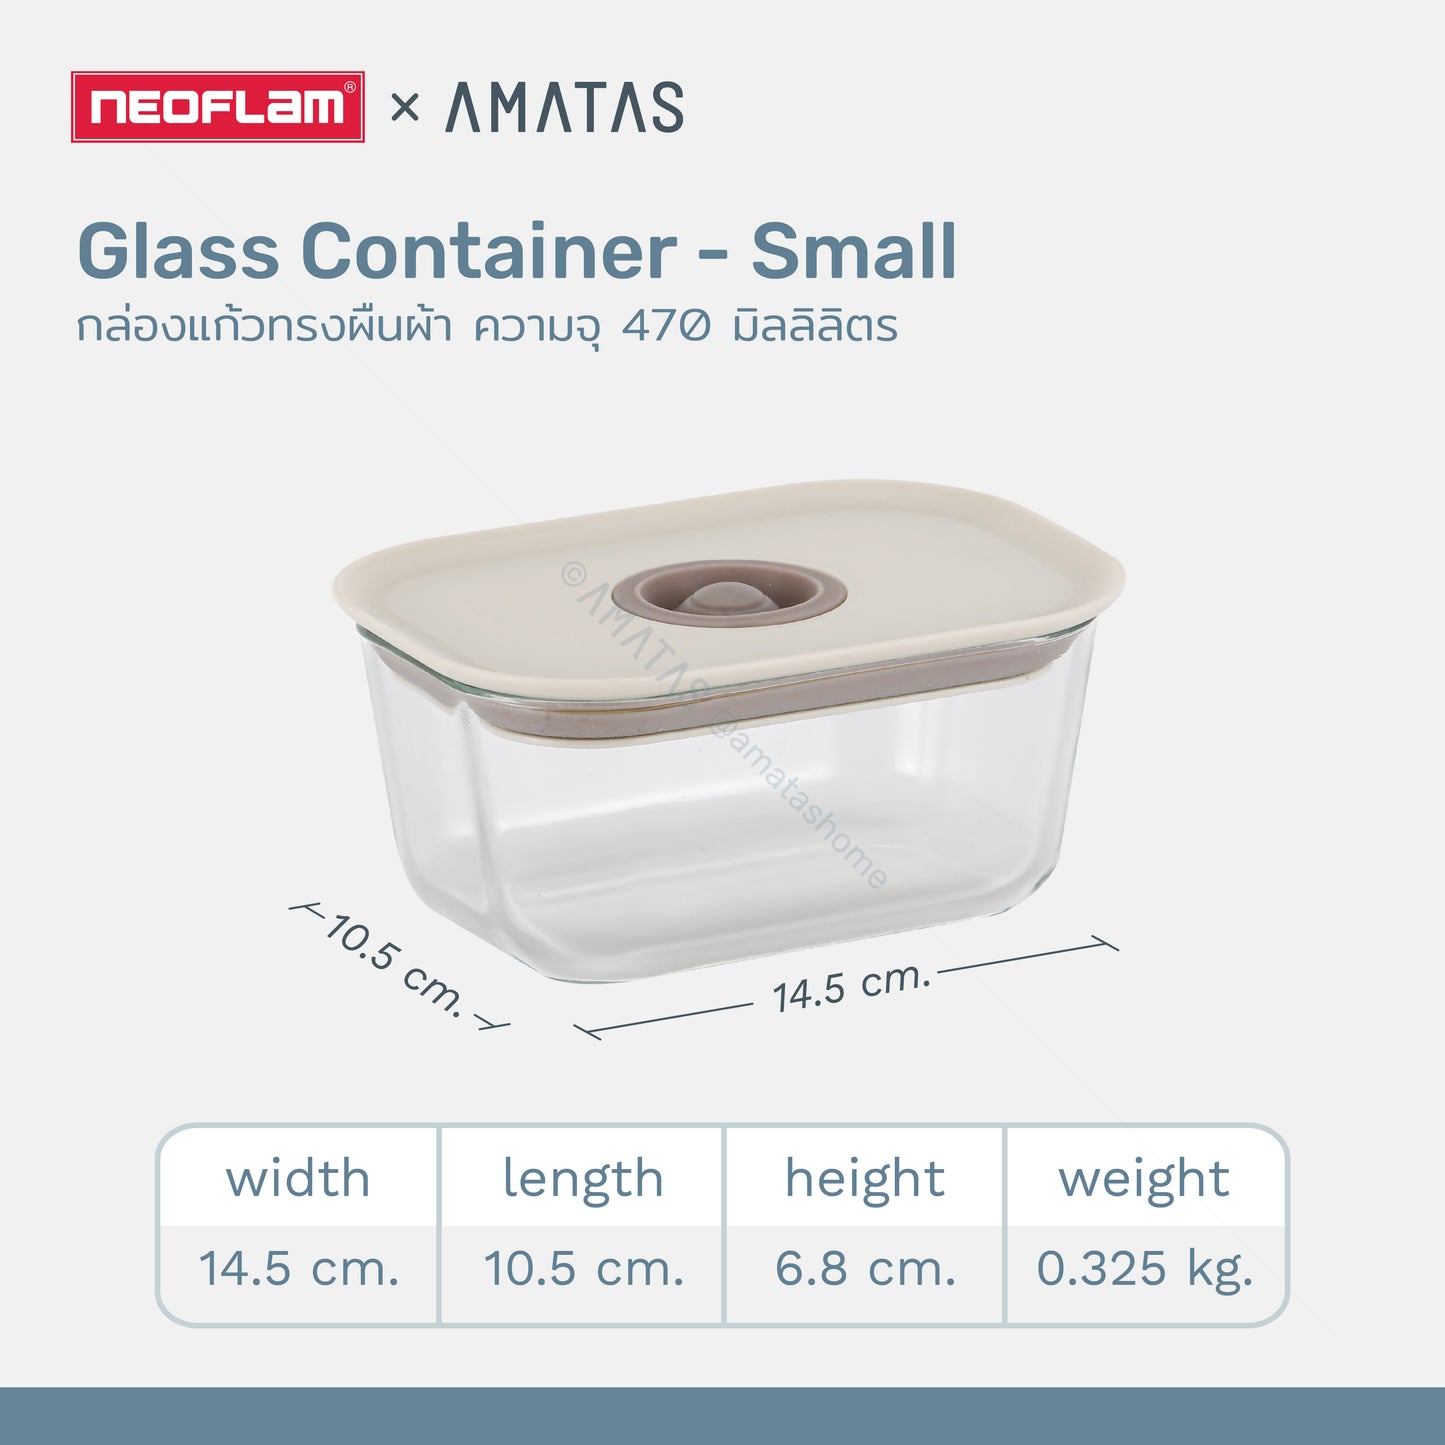 Neoflam FIKA กล่องแก้วสุญญากาศ กล่องข้าว กล่องใส่อาหารแก้ว ทนร้อน-เย็น เข้าไมโครเวฟได้